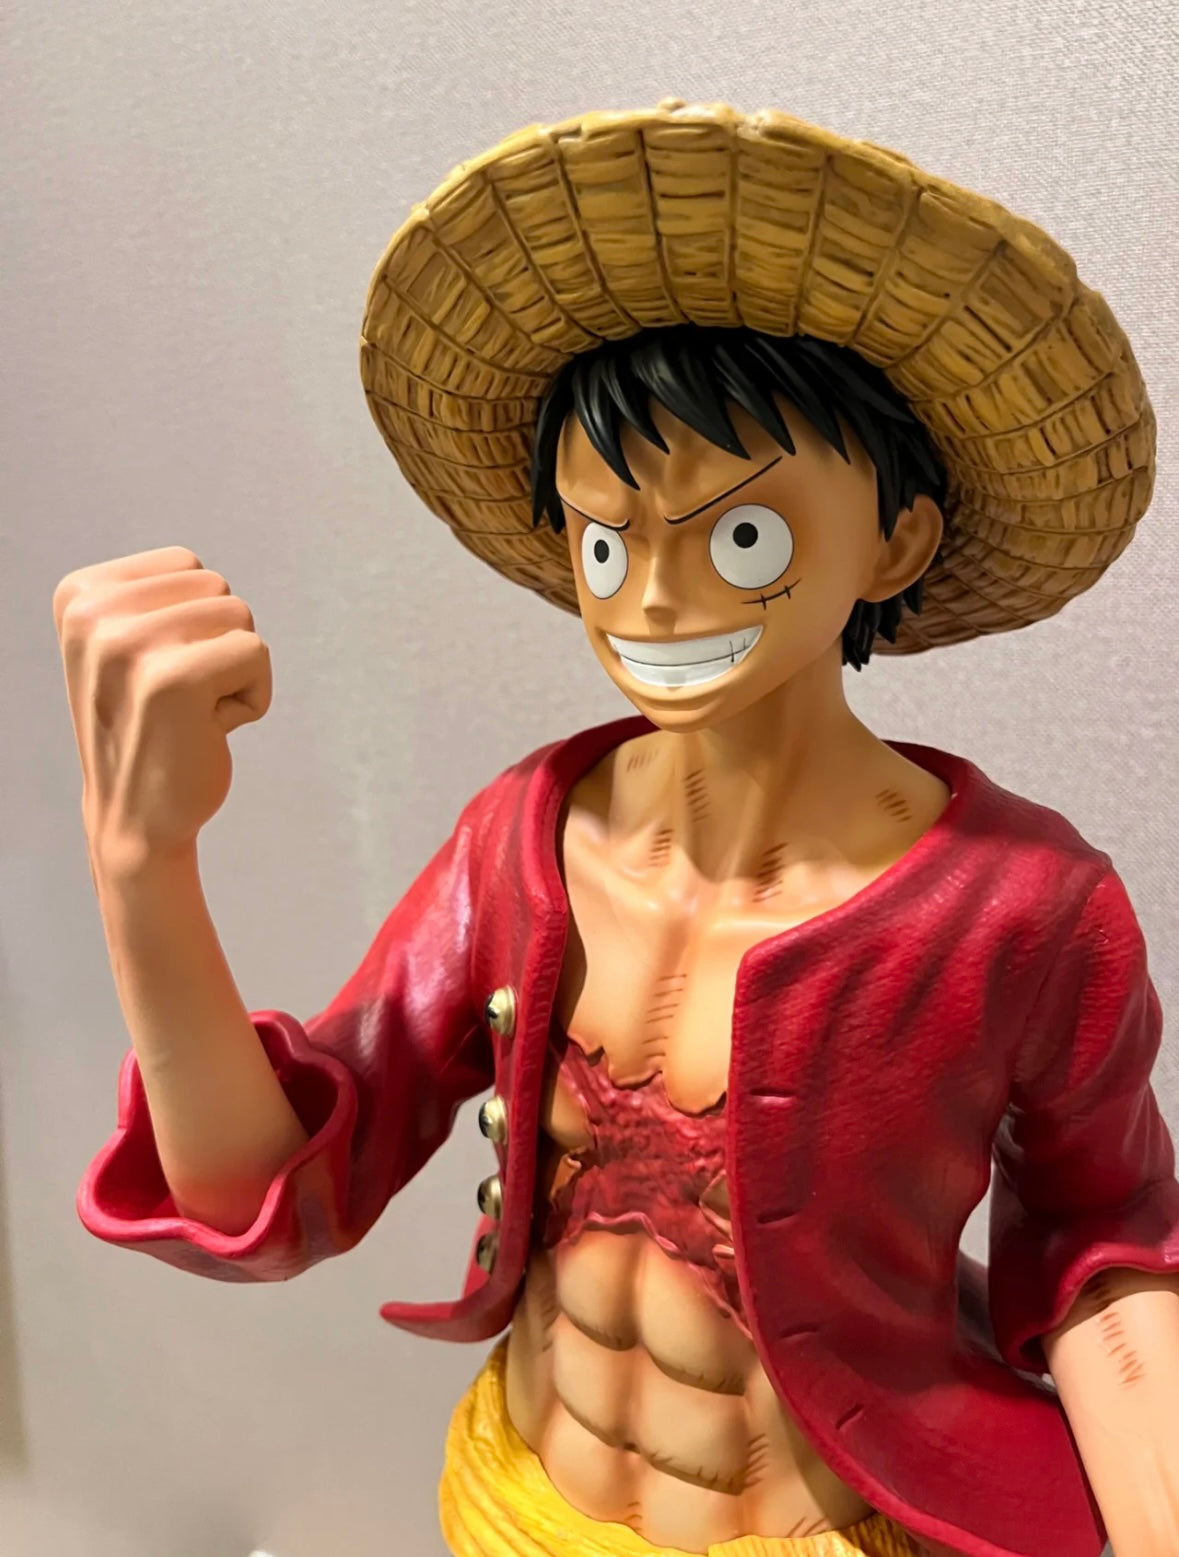 One Piece Monkey D. Luffy Garage kit figure